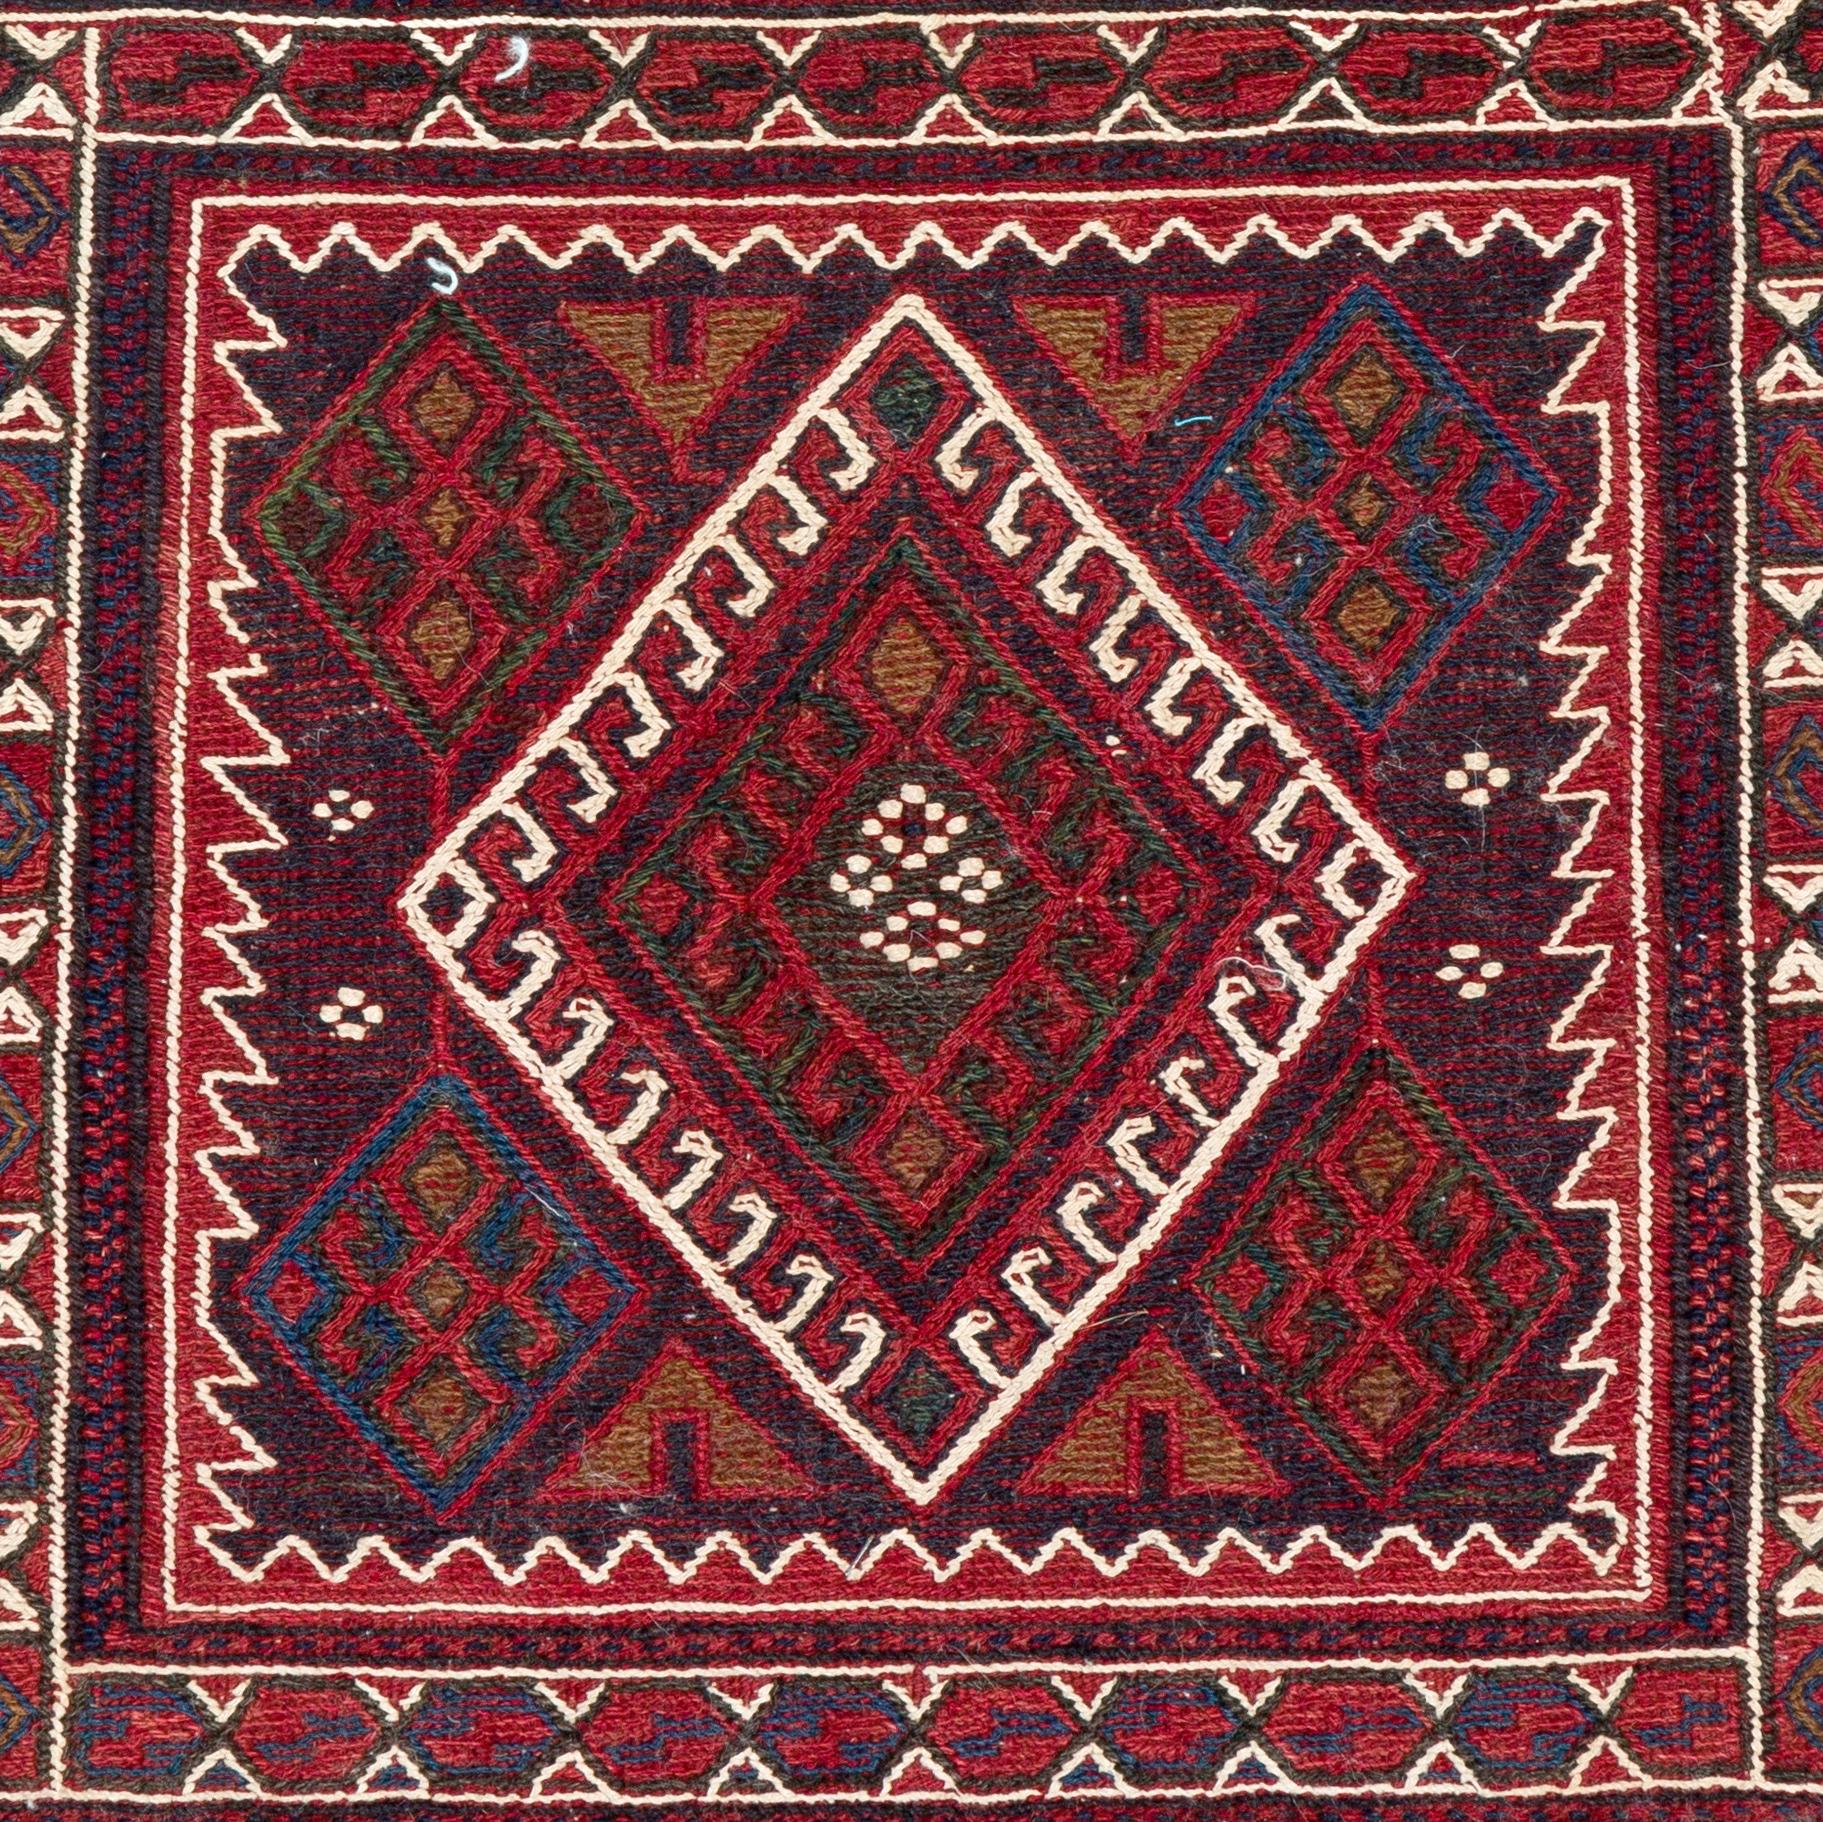 Tribal Rare Vintage Turkish Salt Bag. Decorative Handmade Wall Hanging in Red For Sale